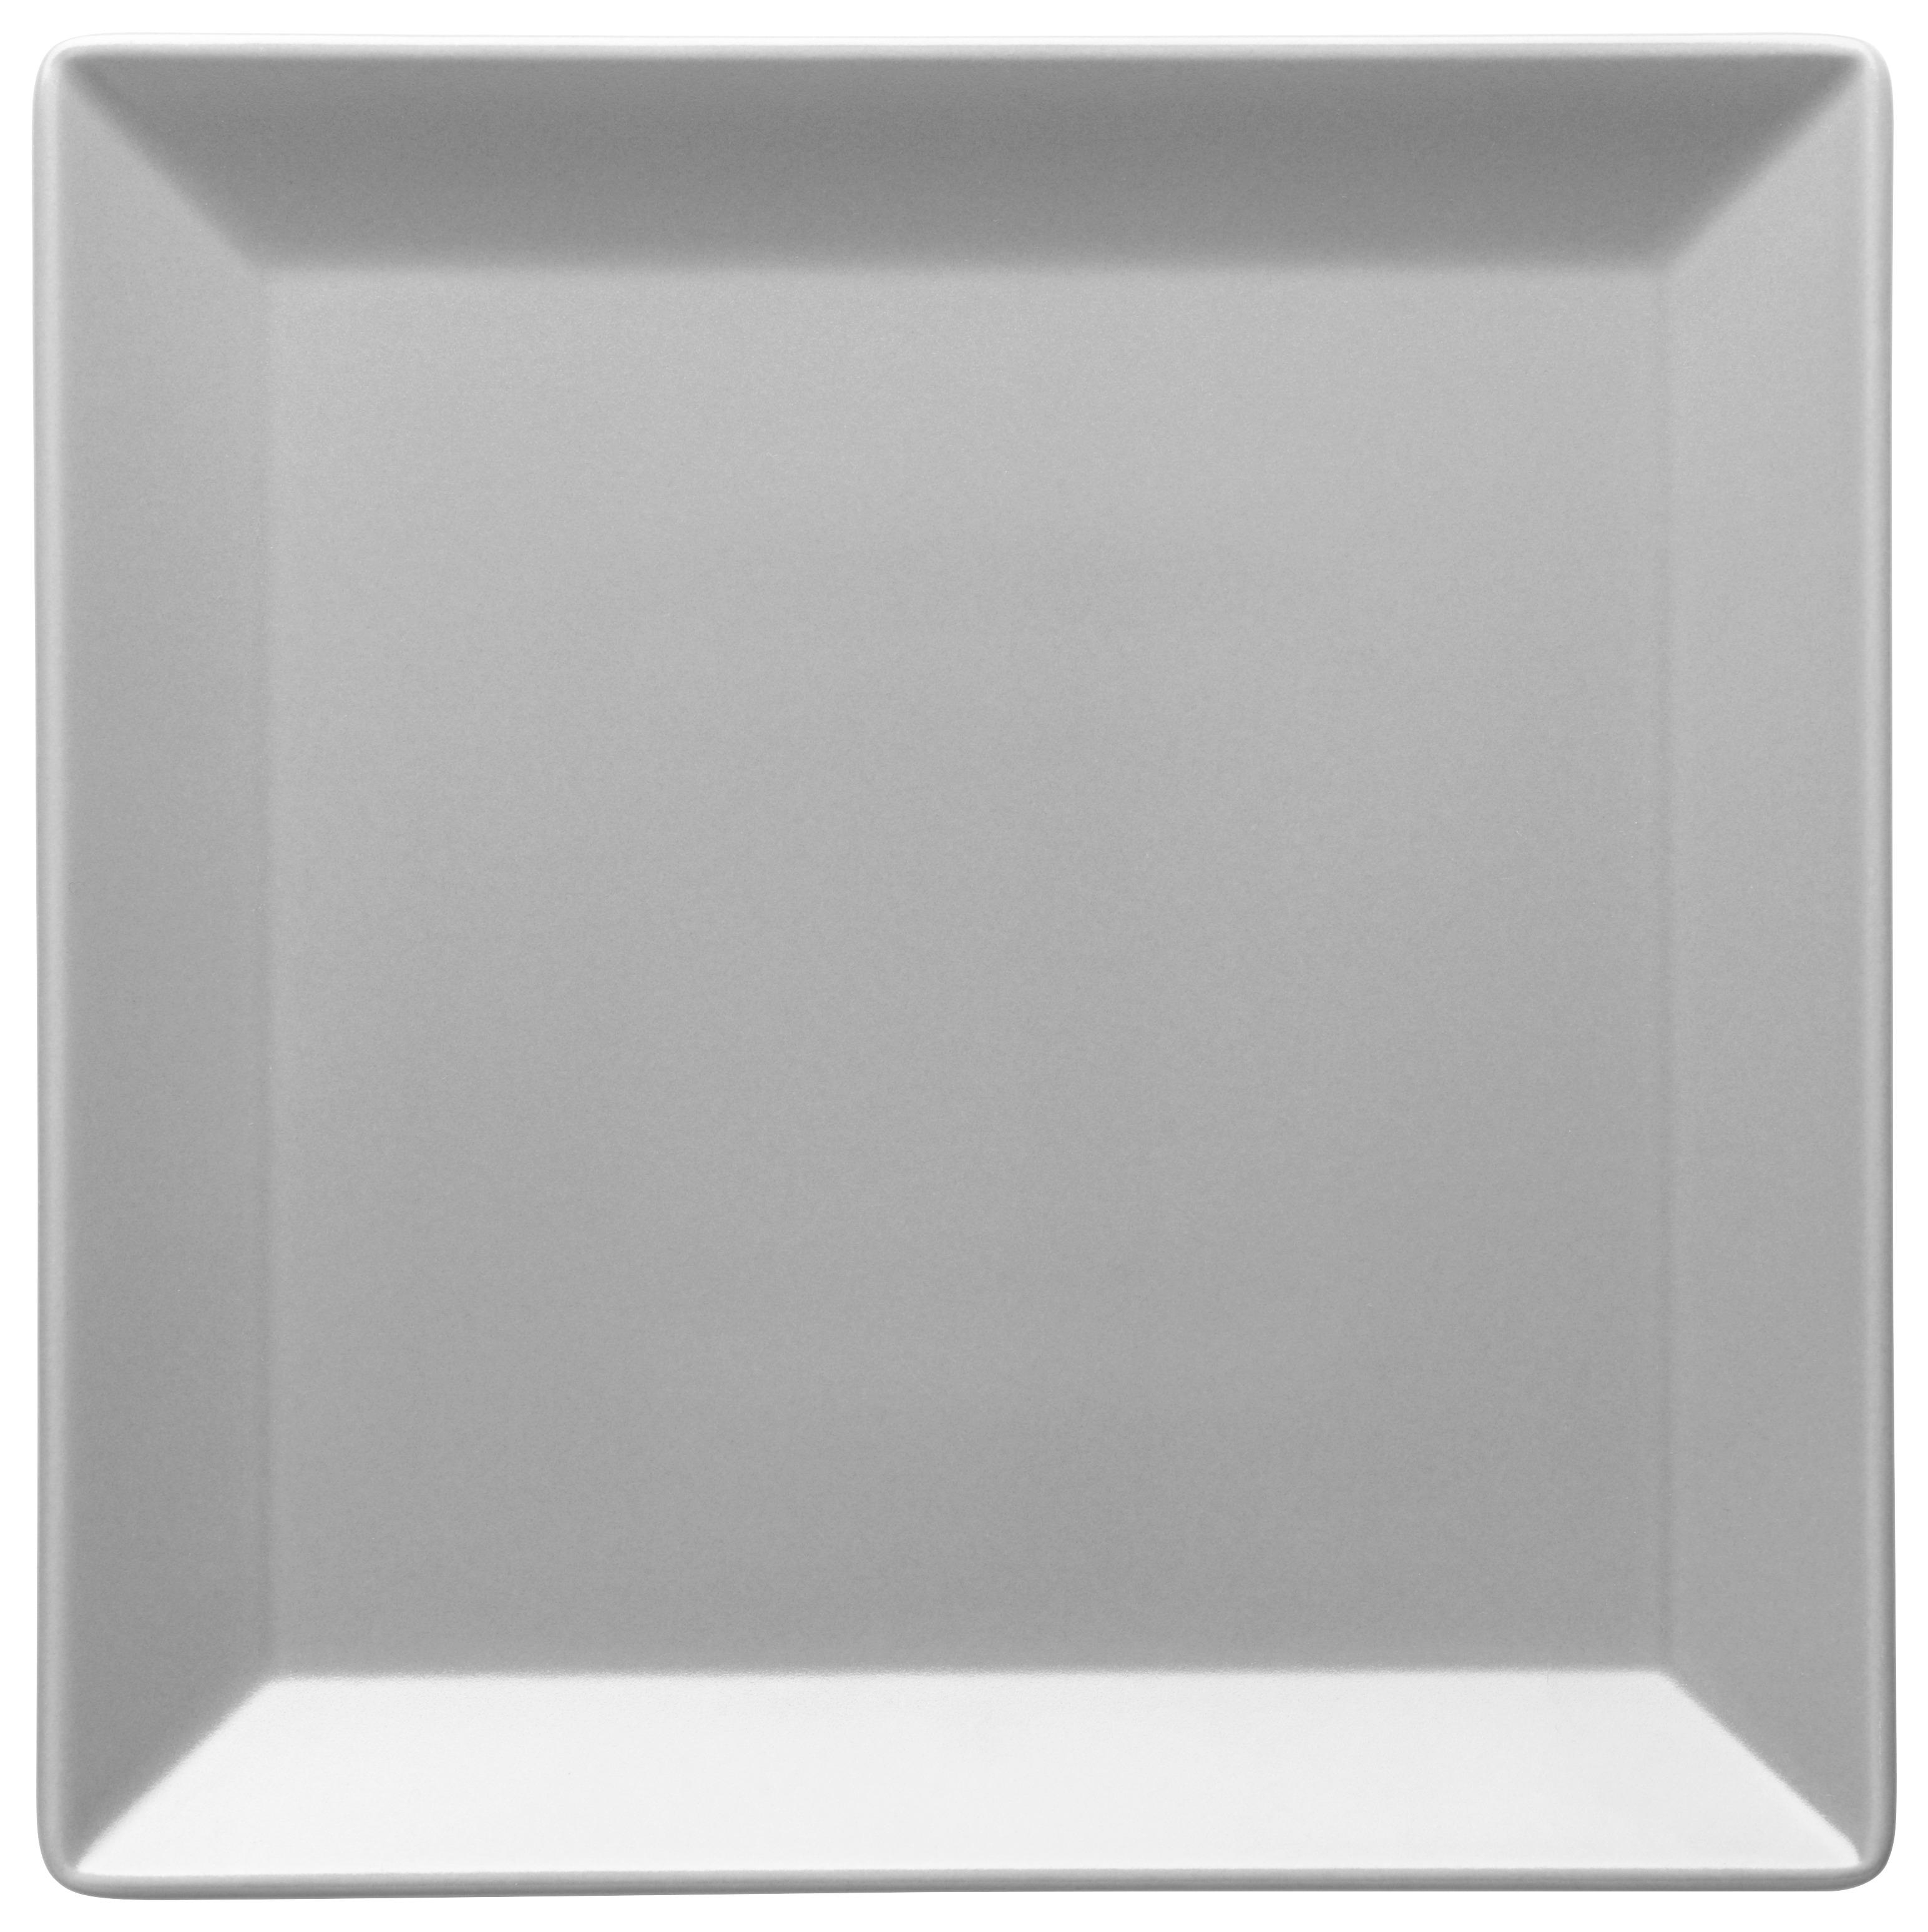 Dessertteller Porzellan 6er-Set Manhattan ca. 21 cm - Schwarz/Weiß, Basics, Keramik (21/21cm) - Mäser